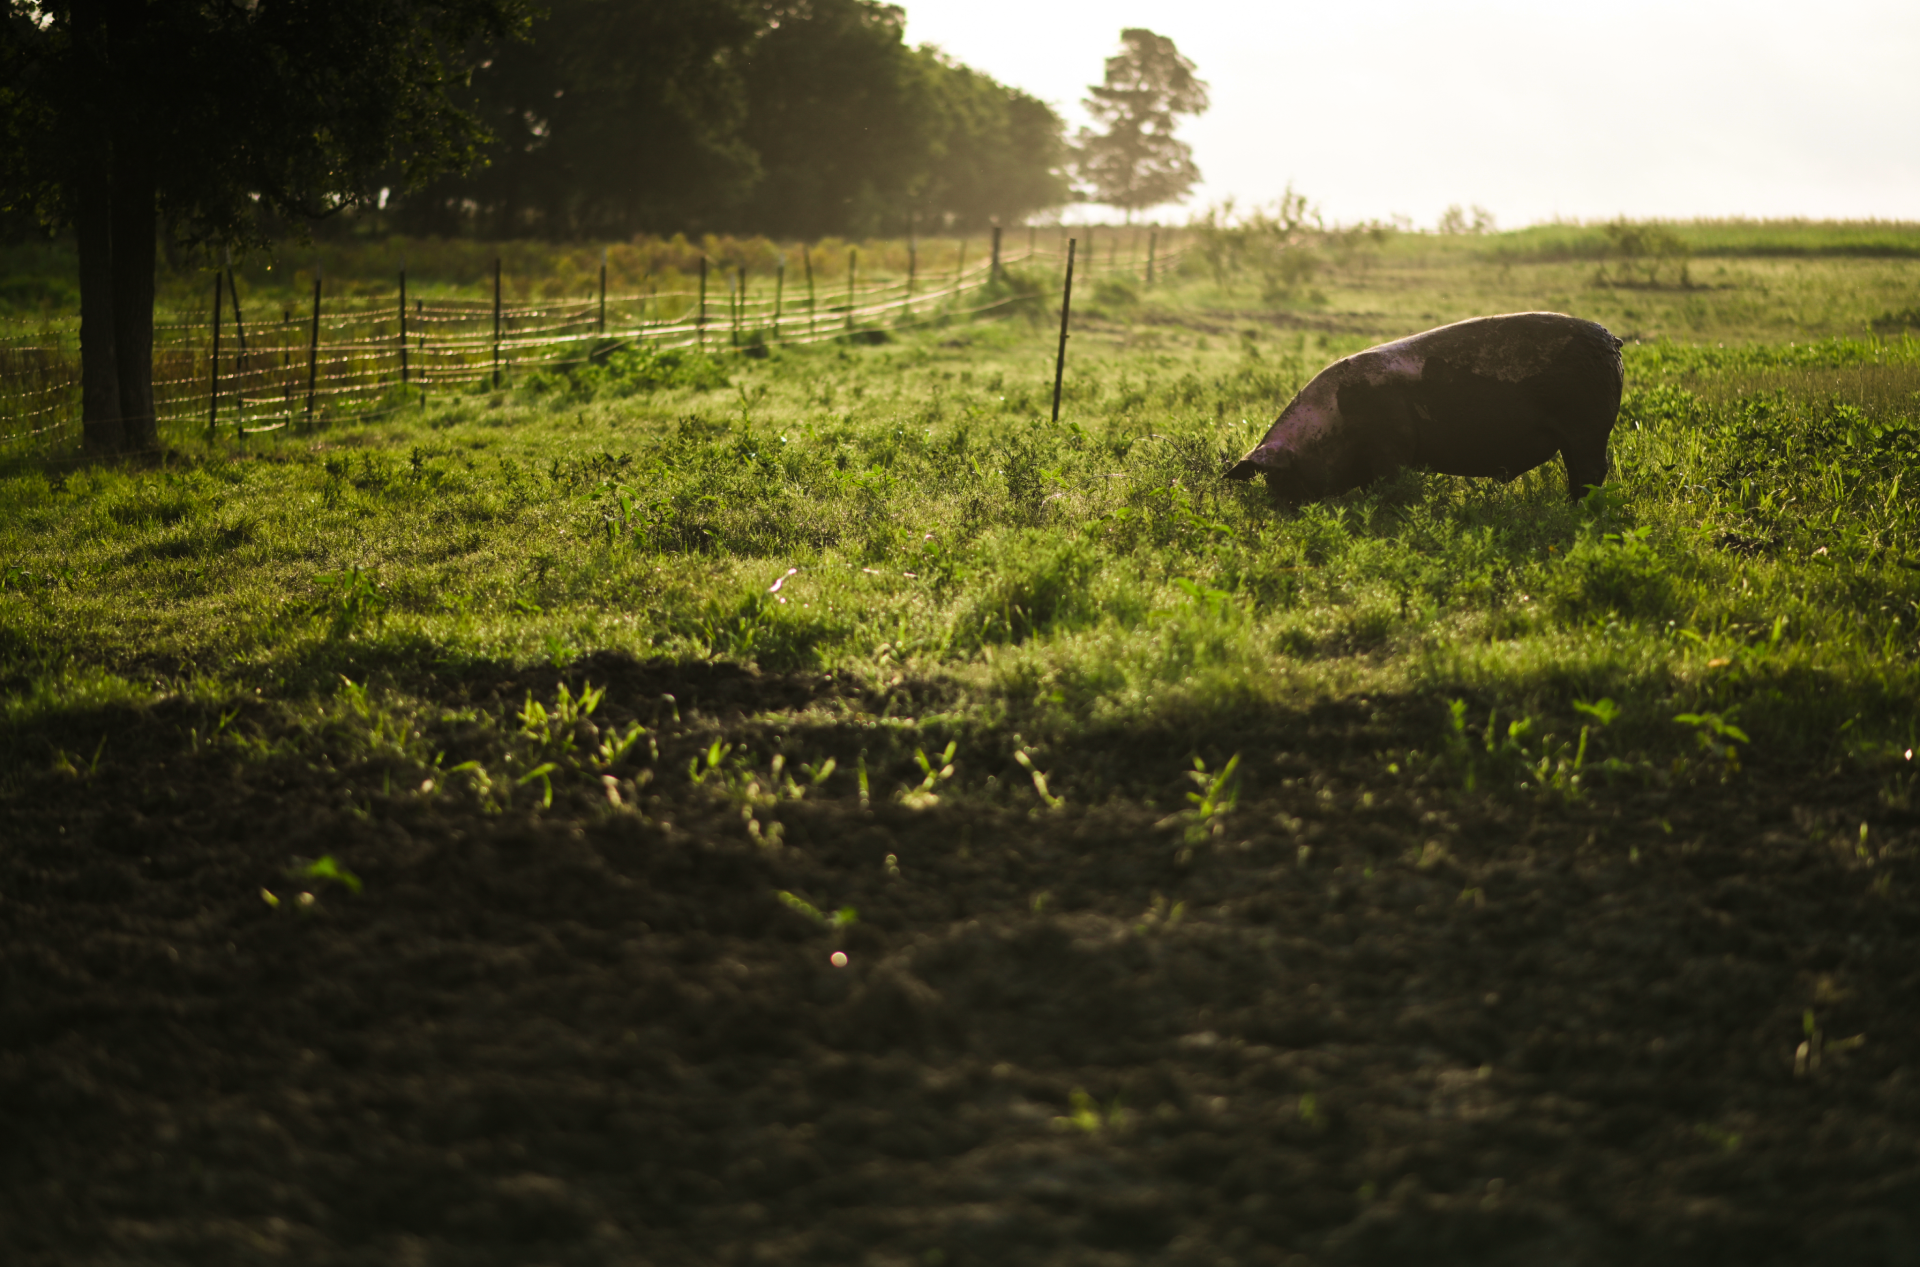 Pasture-raised pig at the farm